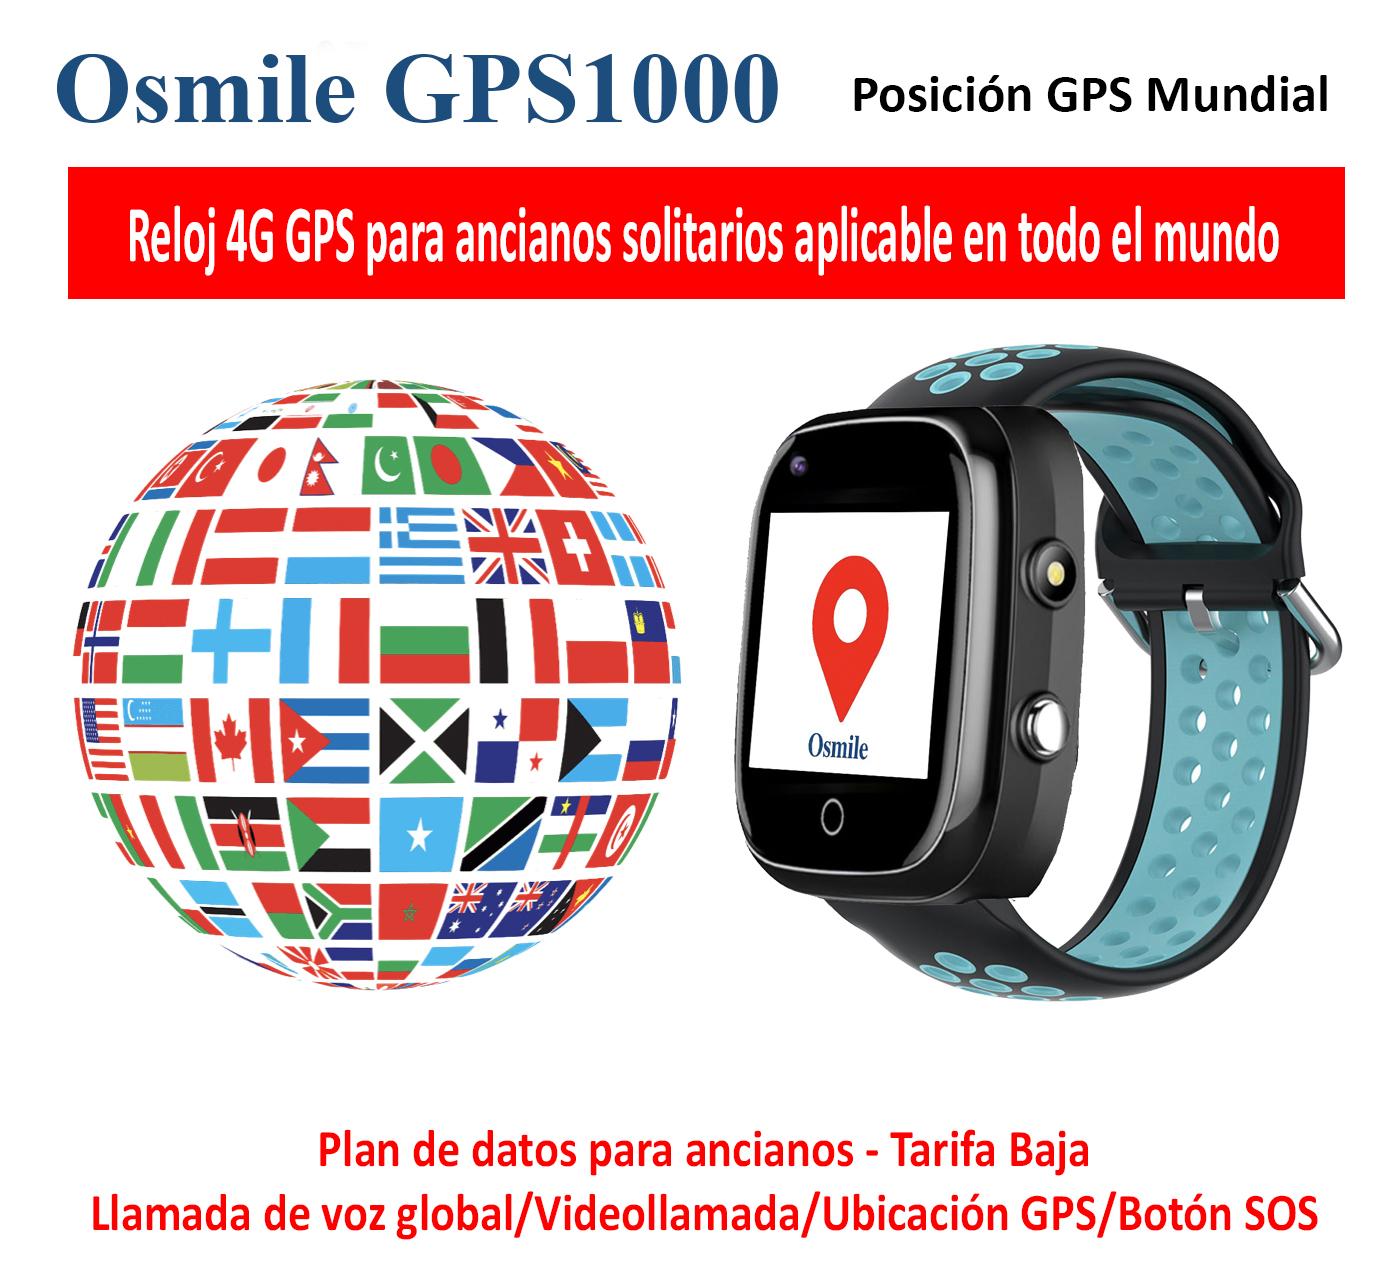 Reloj Inteligente Rastreador Localizador Niños GPS Anti-perdidos